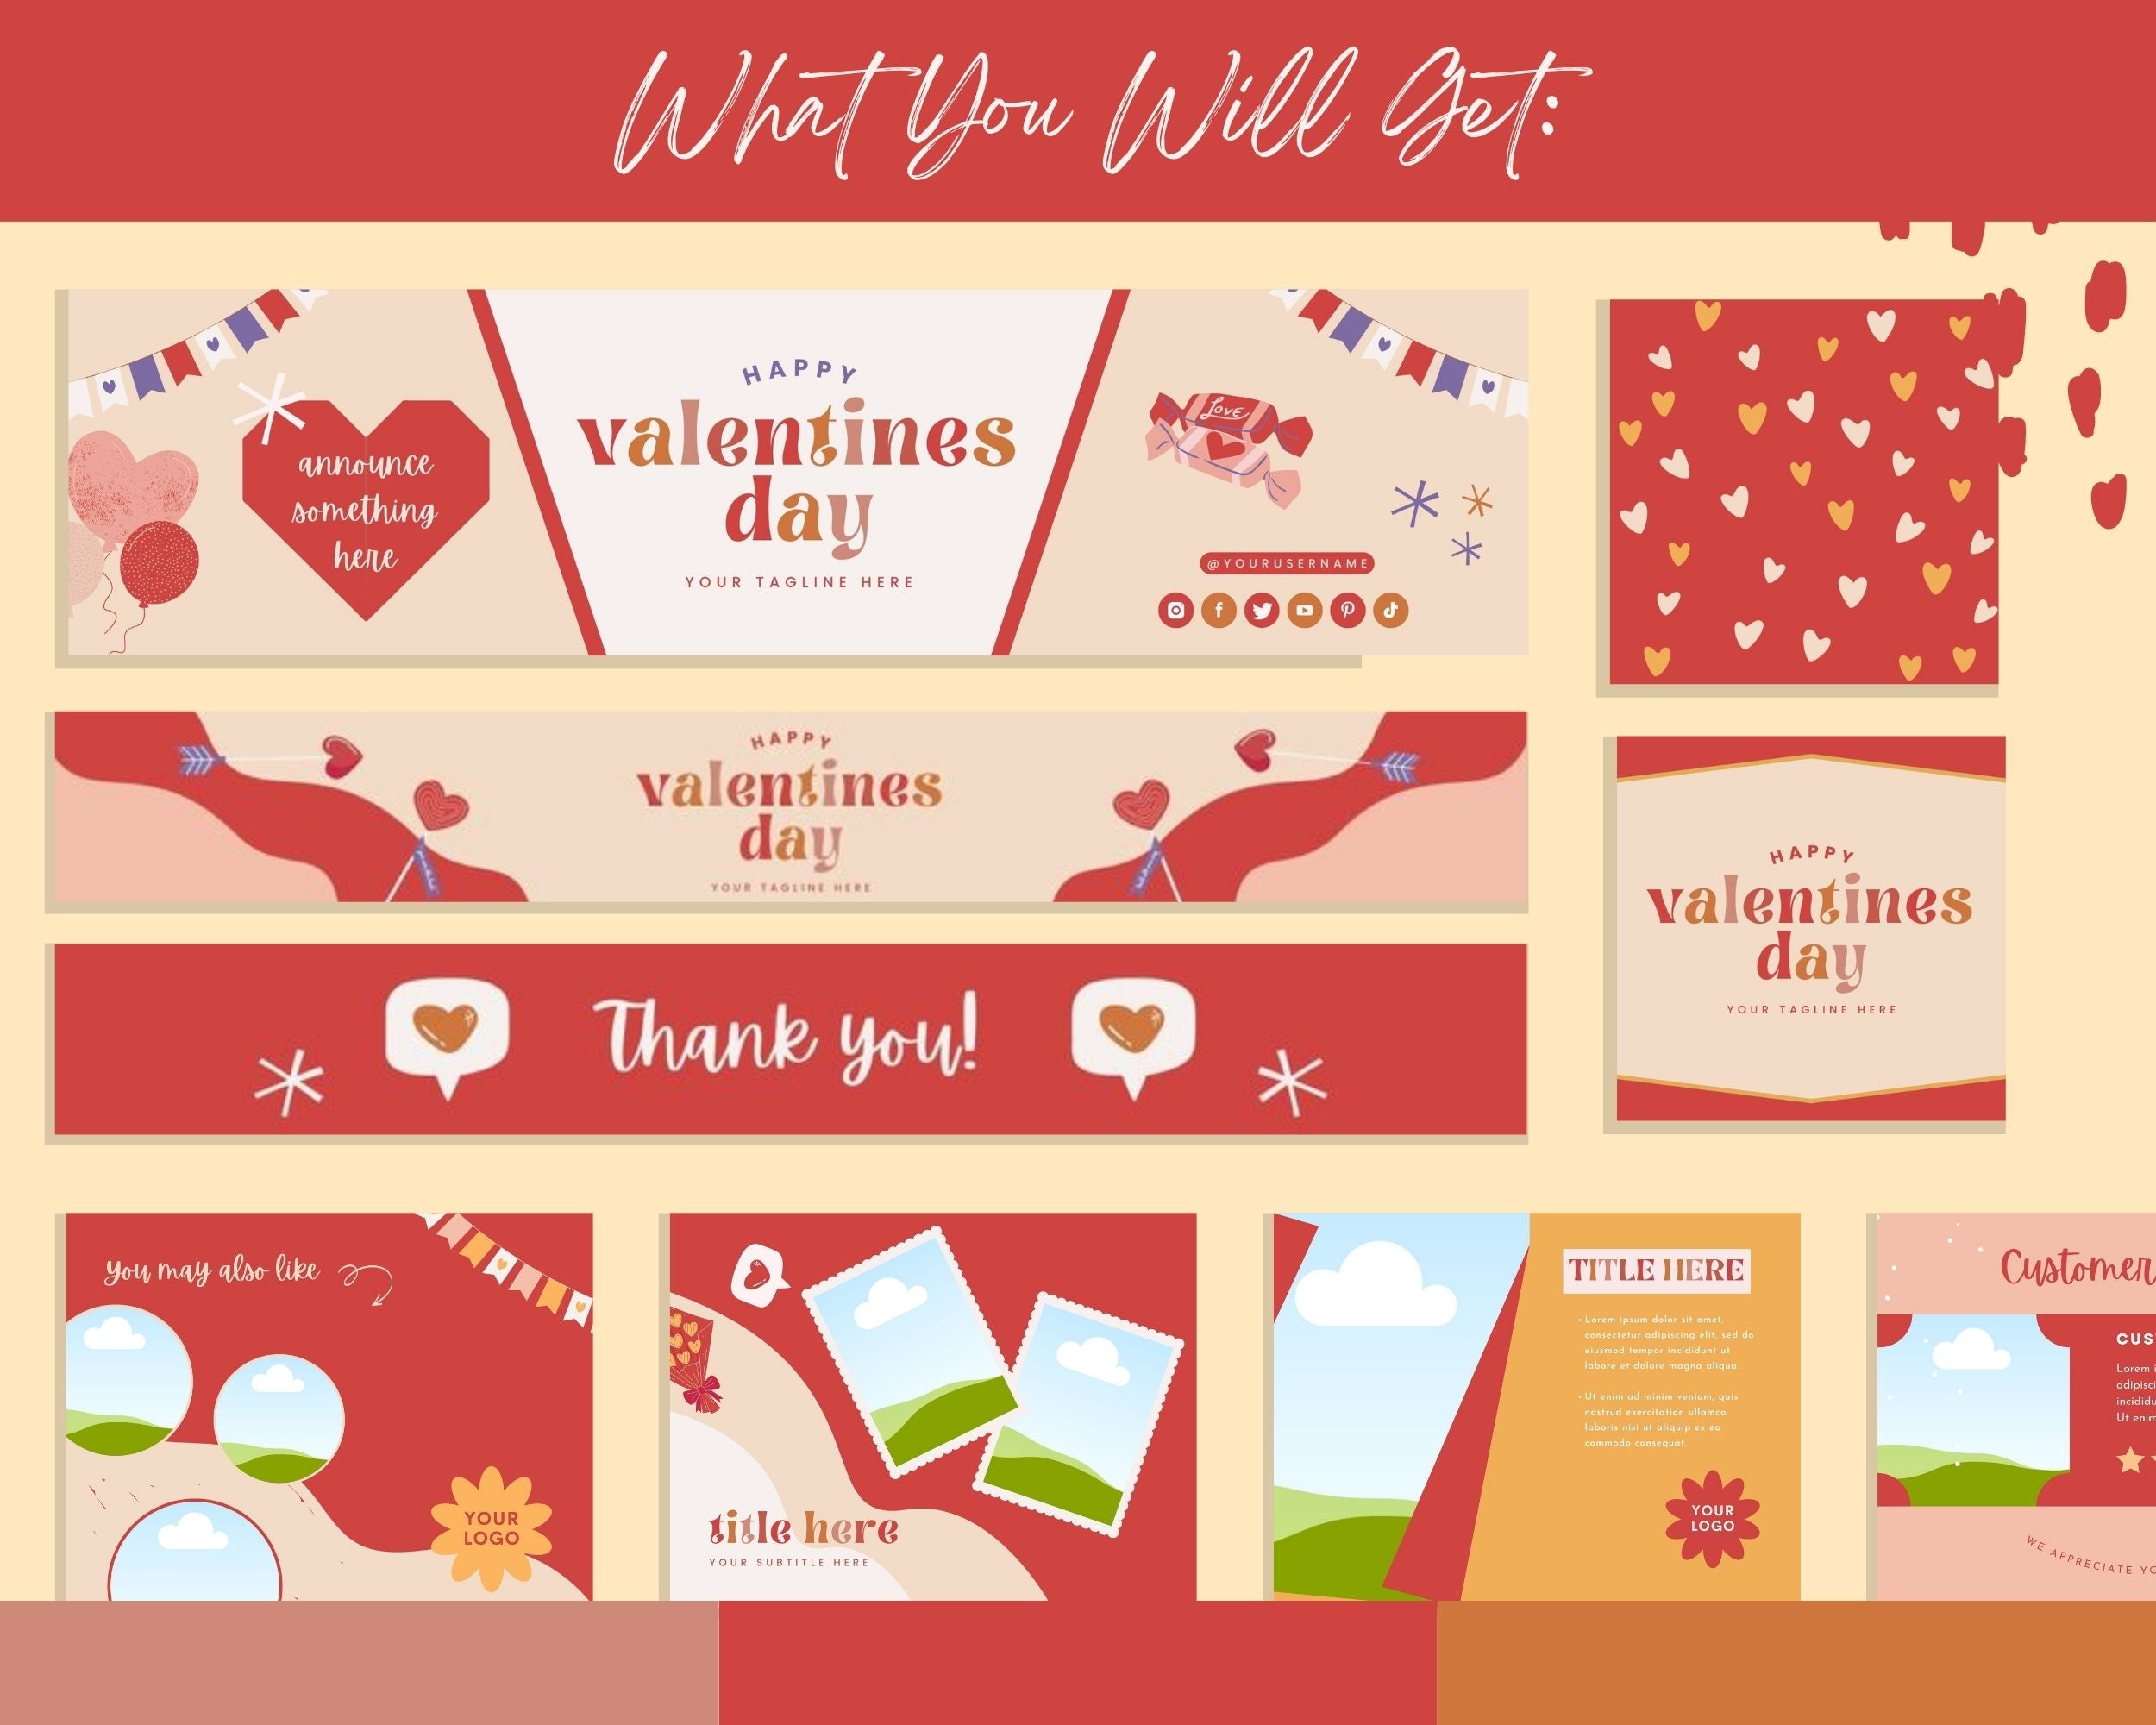 Valentines Day Etsy Shop Banner Kit | Etsy Banner Canva Templates | Etsy Store Listing Design | Bright Etsy Branding | Etsy Success Kit